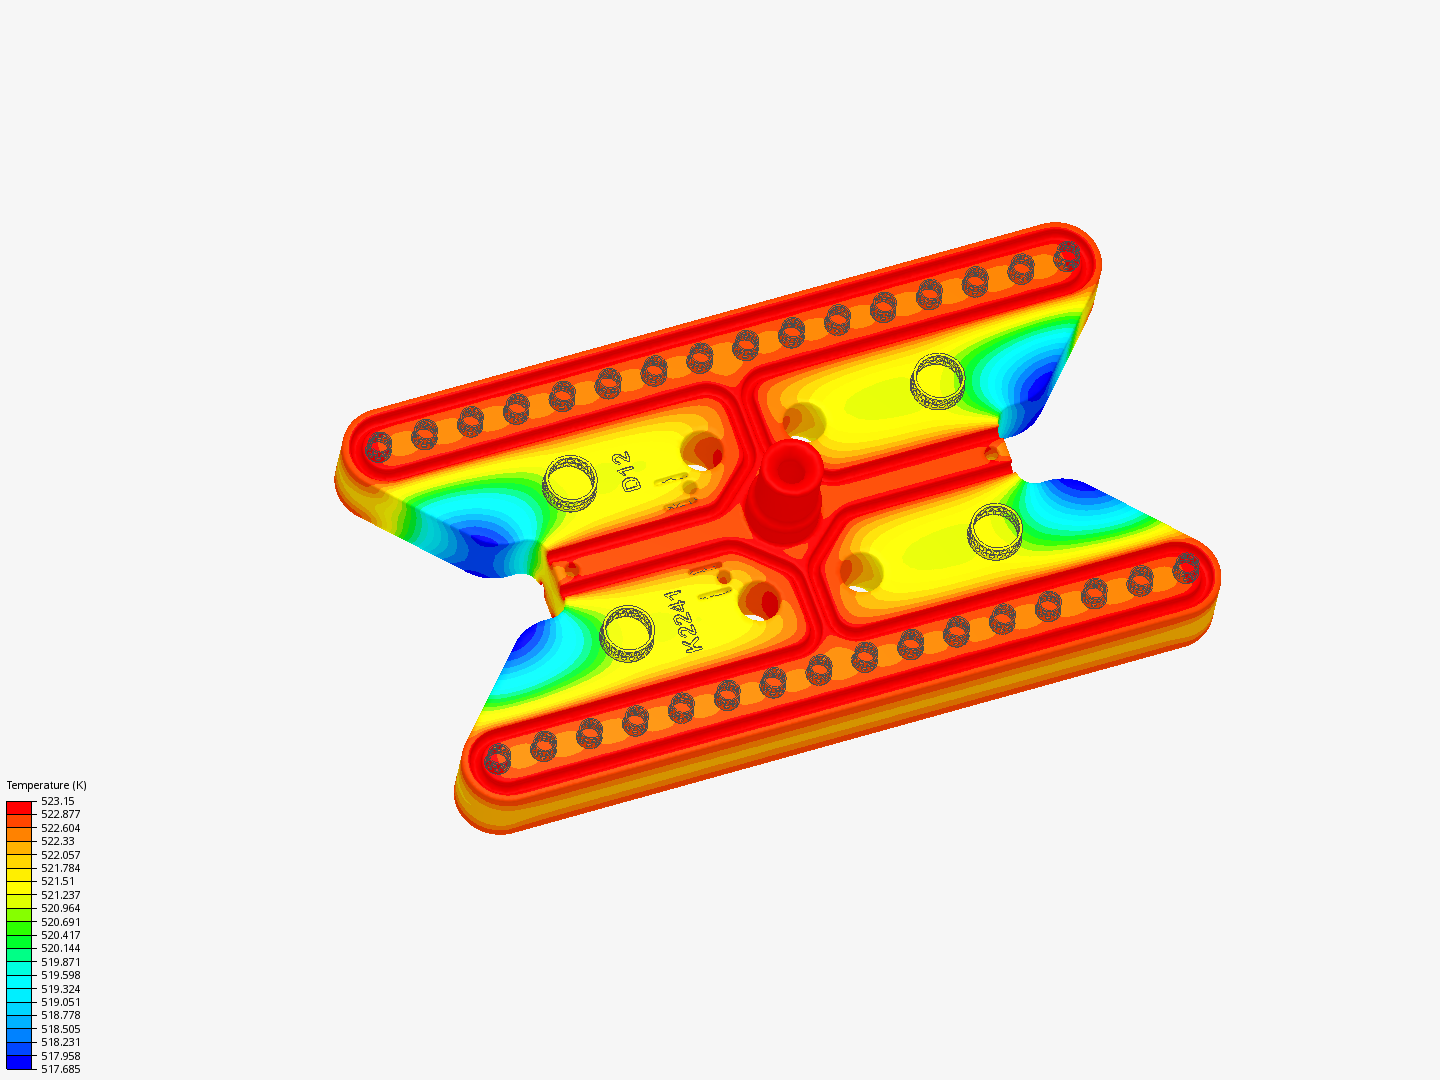 K2241 manifold thermal analyses image